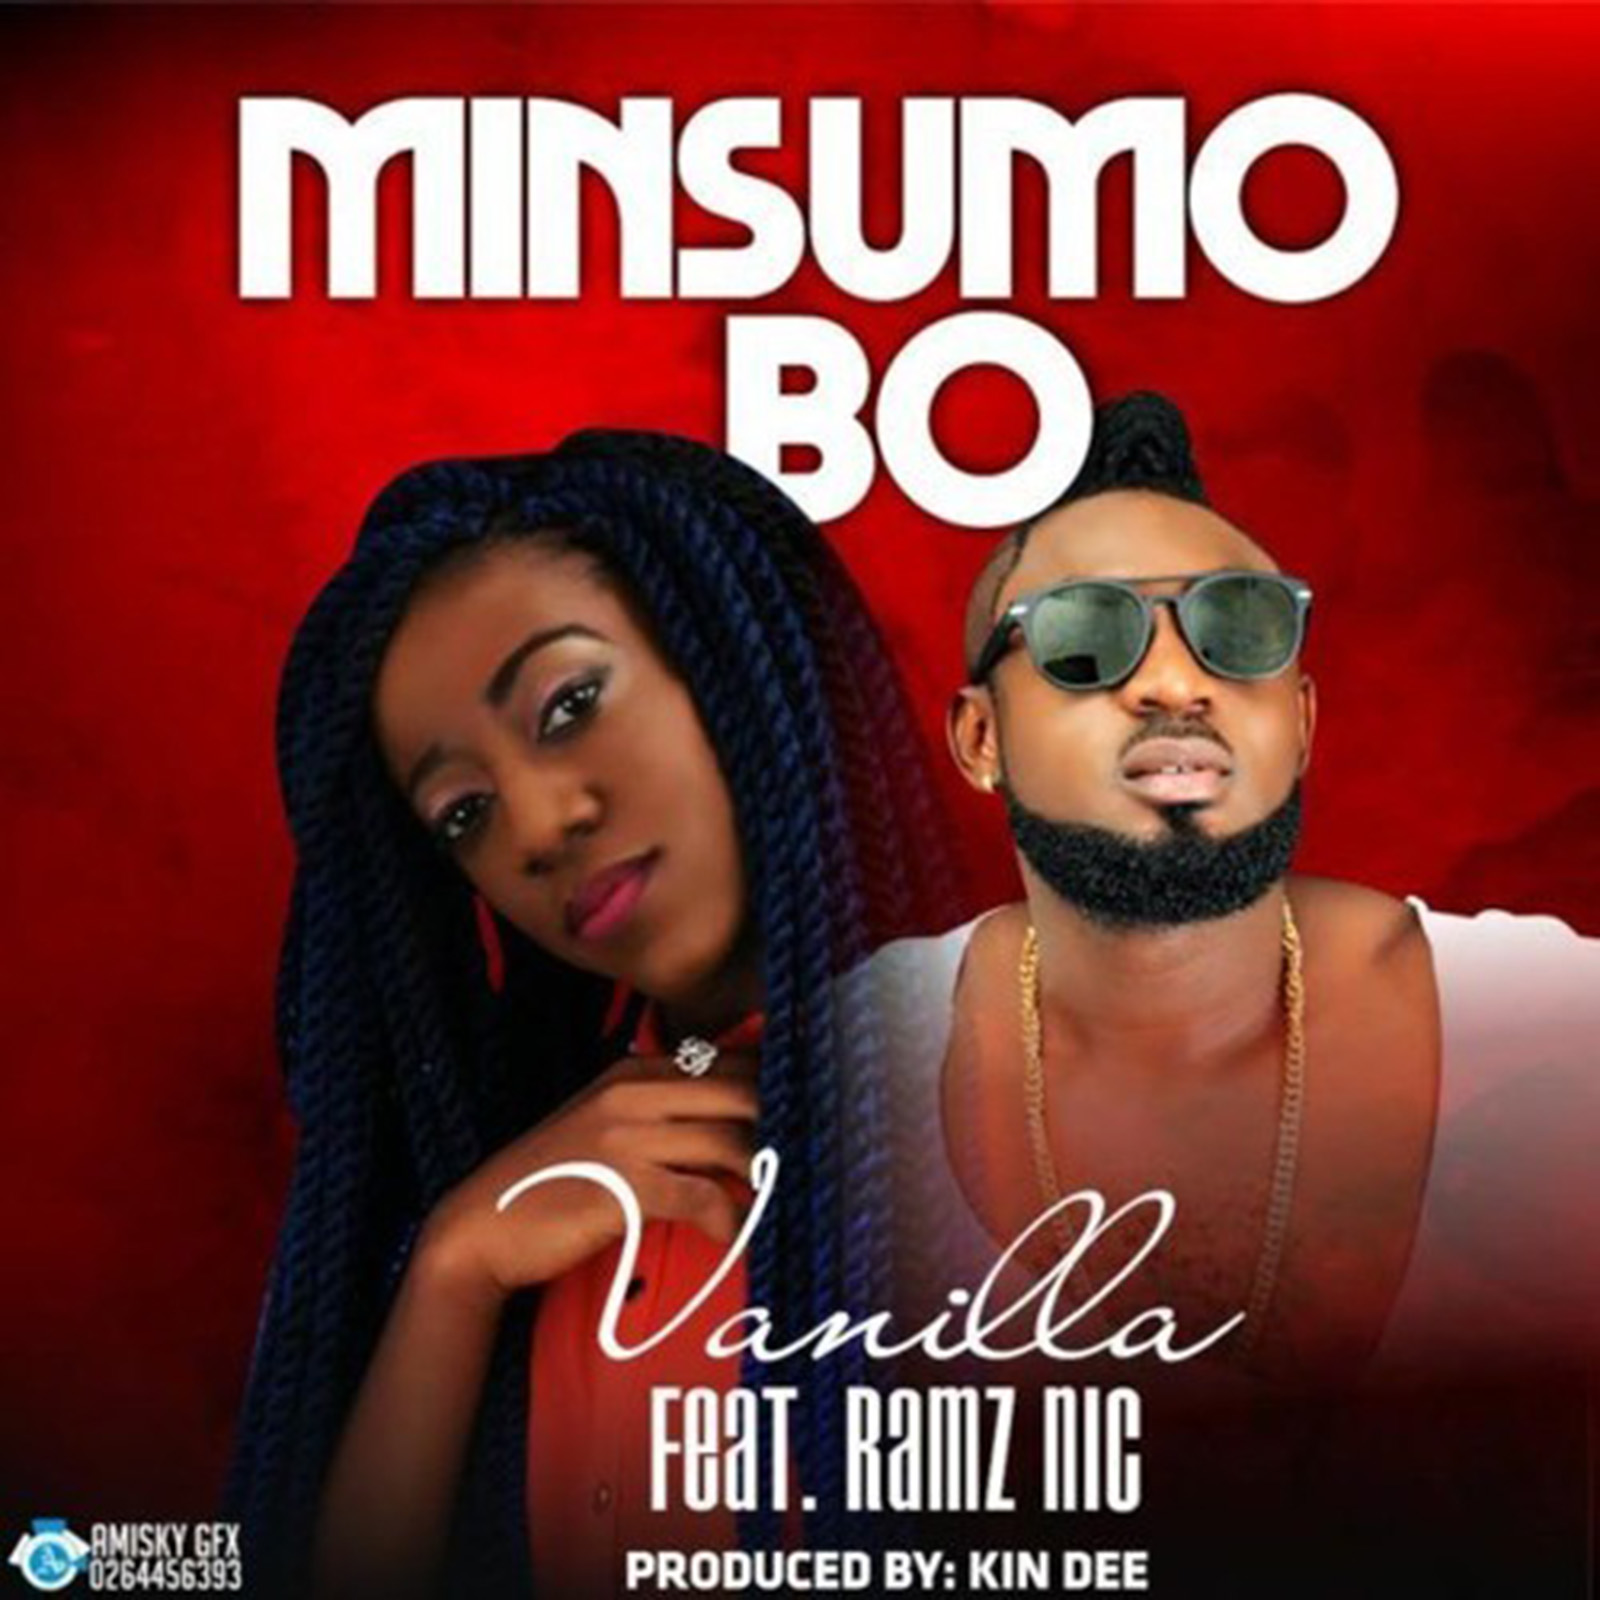 Minsumo Bo by Vanilla feat. Ramz Nic